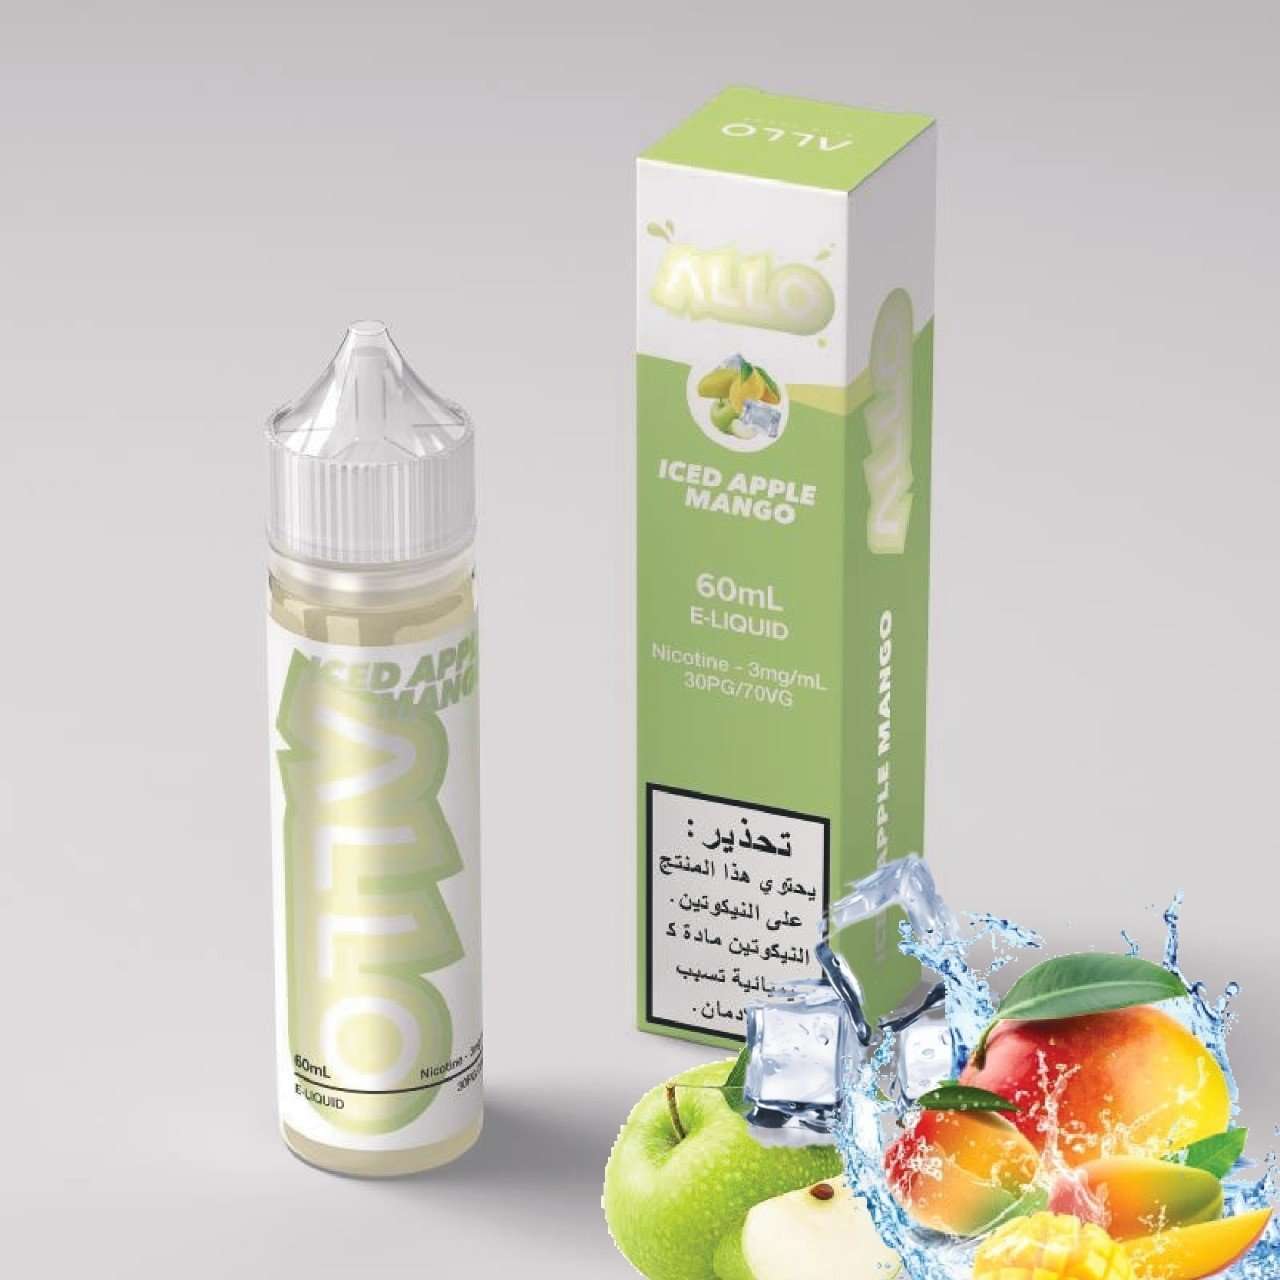 Vape e-liquid Allo brand Iced apple mango 60ml 3mg